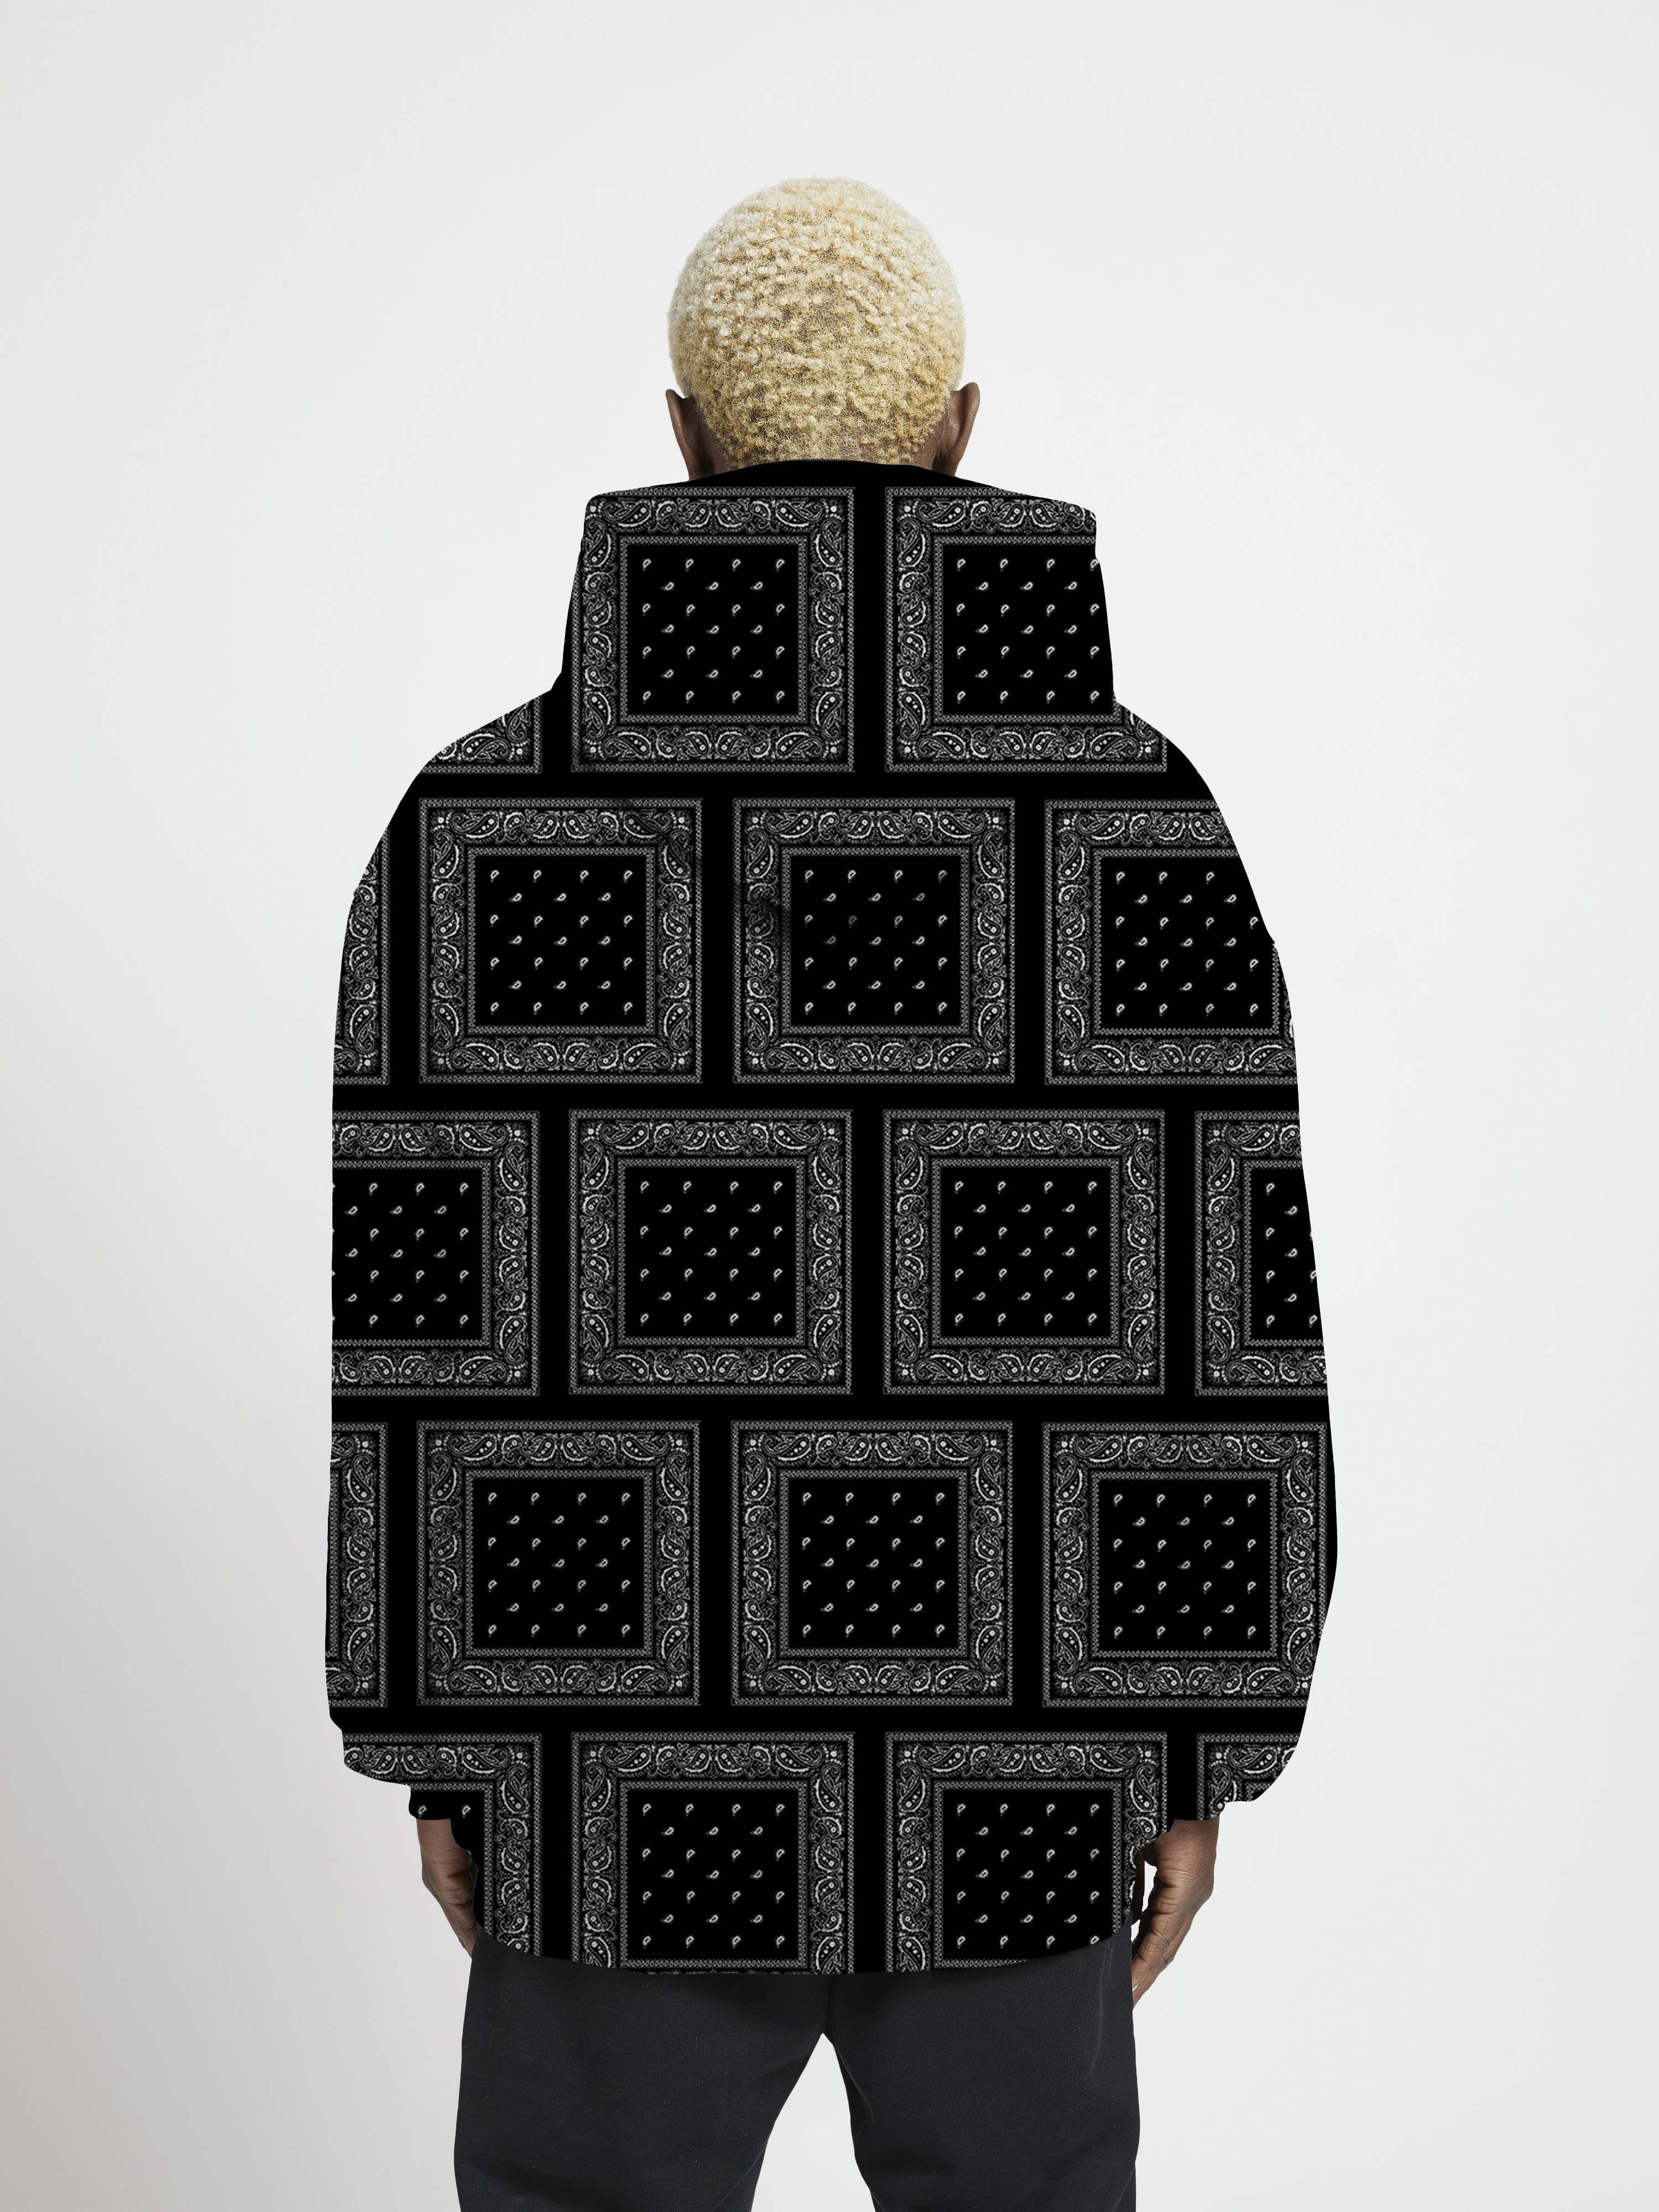 Louis Vuitton Mixed Monogram Pajama Shirt BLACK. Size 36